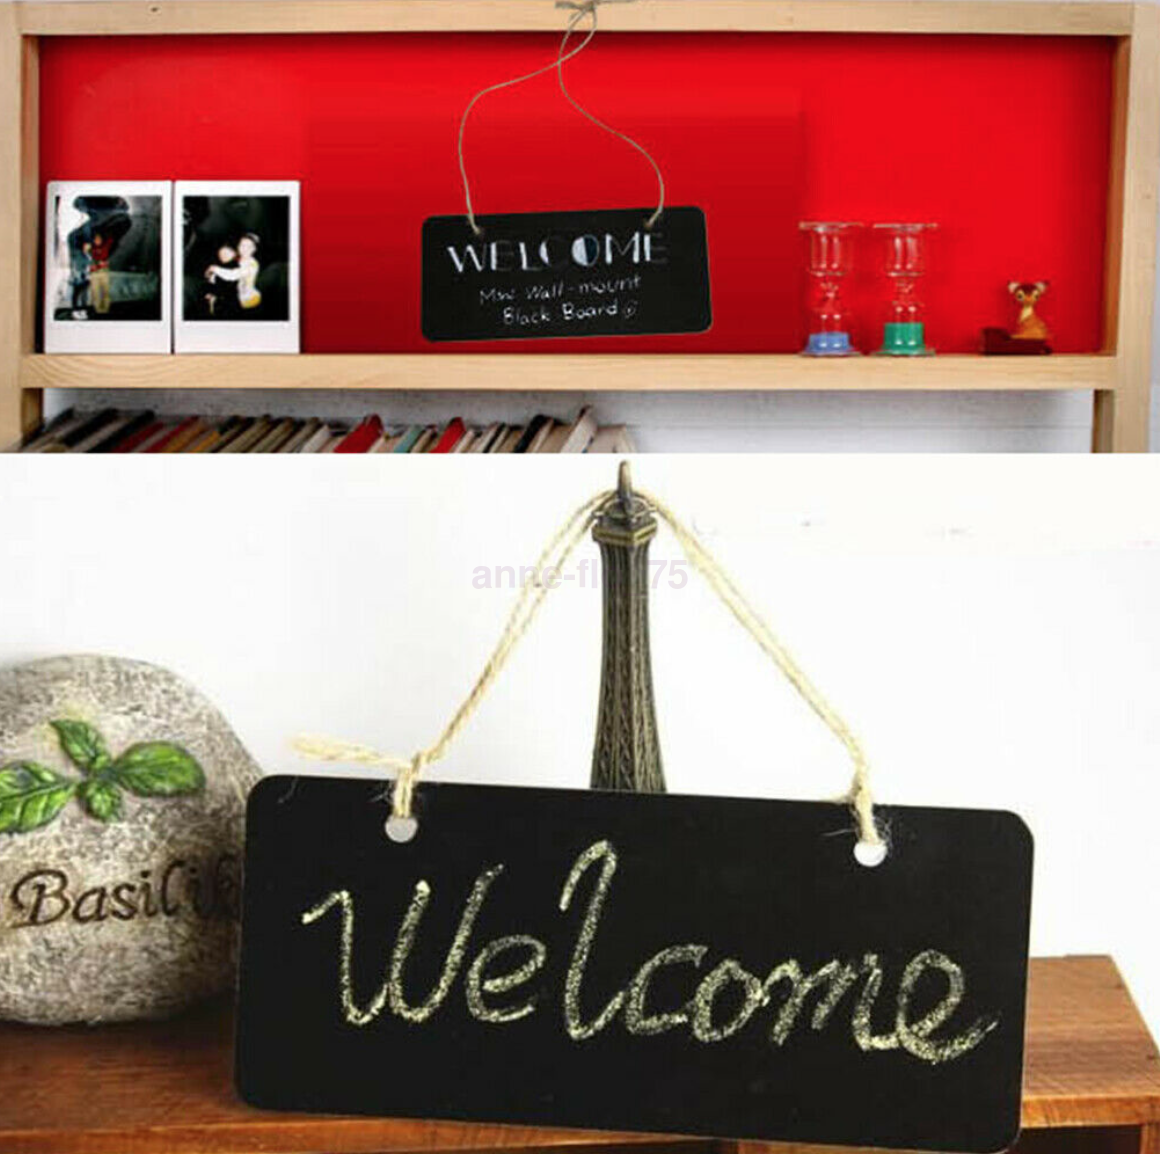 Mini Blackboard Message Boards Small Hanging Rope ChalkBoard Cafe 18 x 8cm